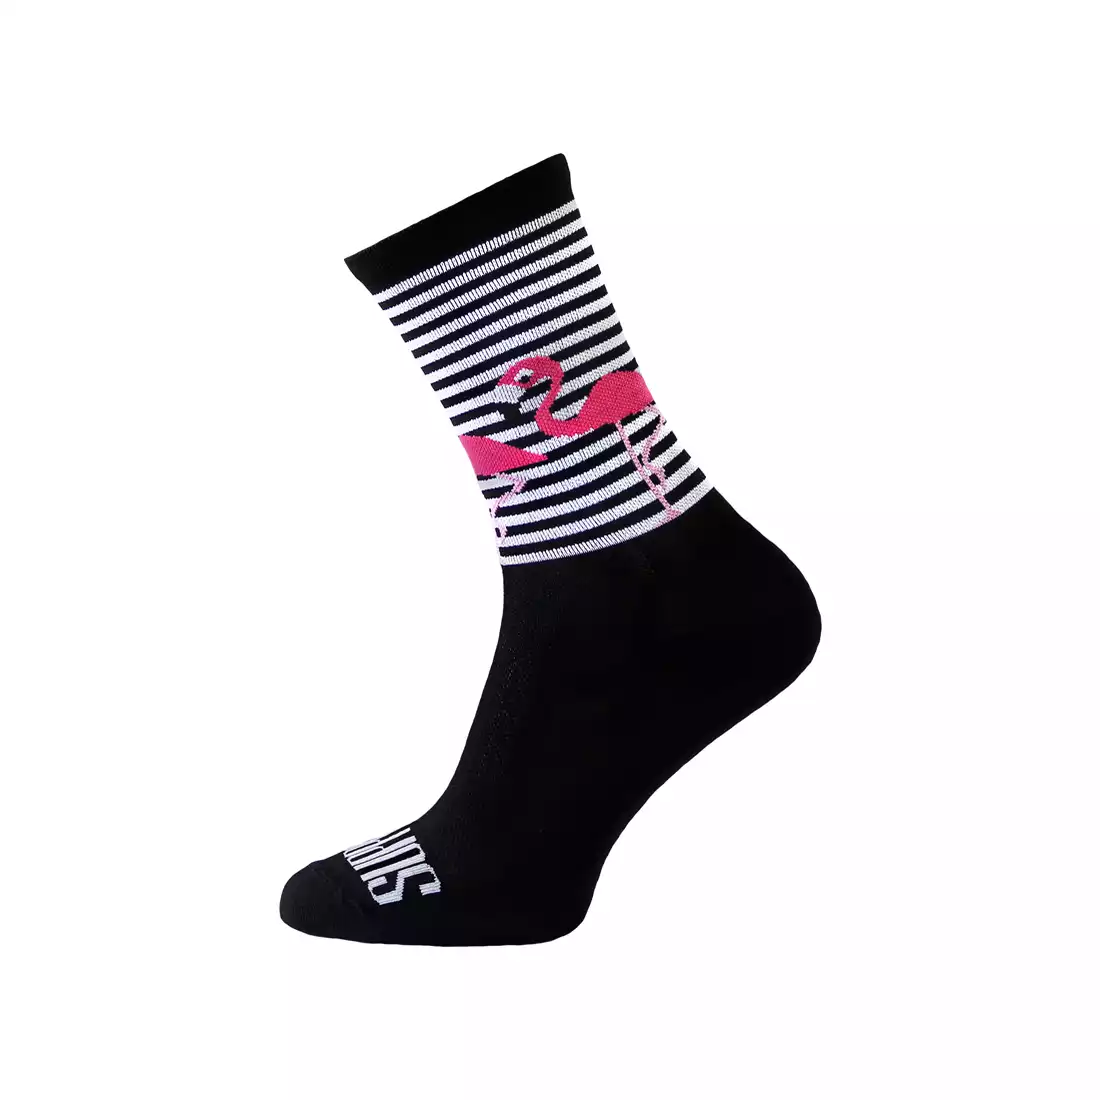 SUPPORTSPORT Cycling socks, Flamingo Stripes